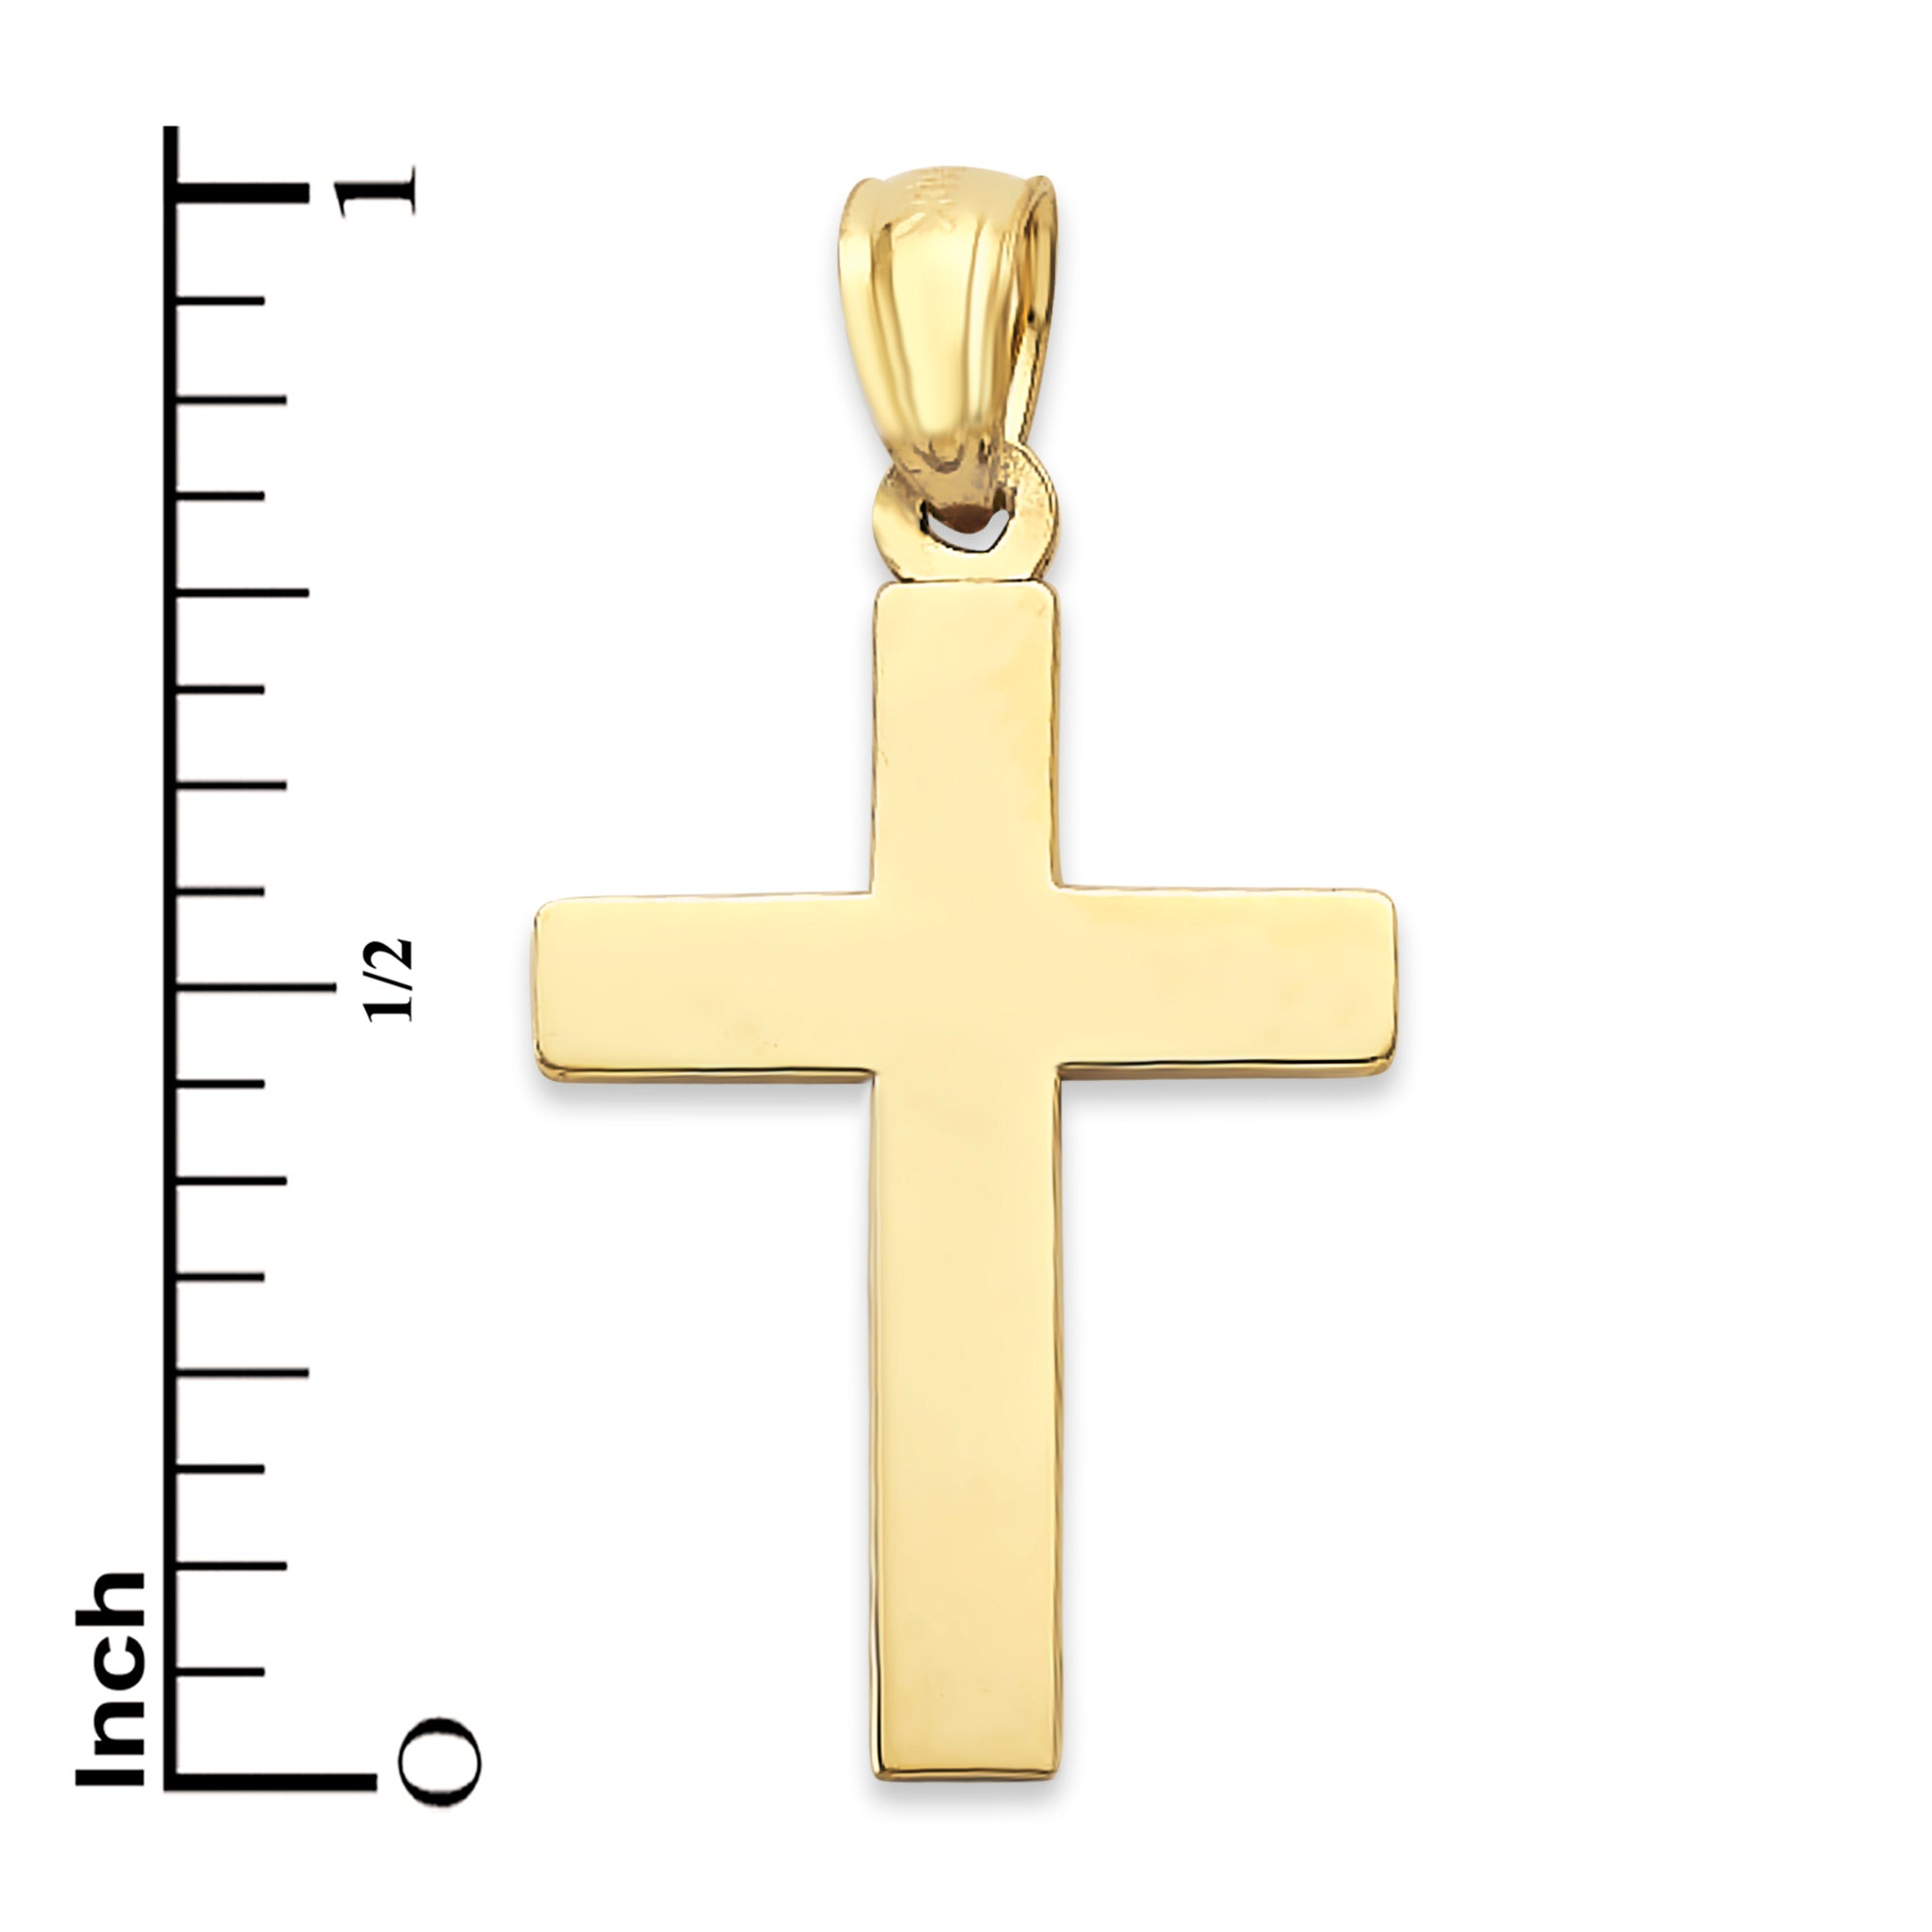 Solid Gold Cross Pendant - 10k or 14k